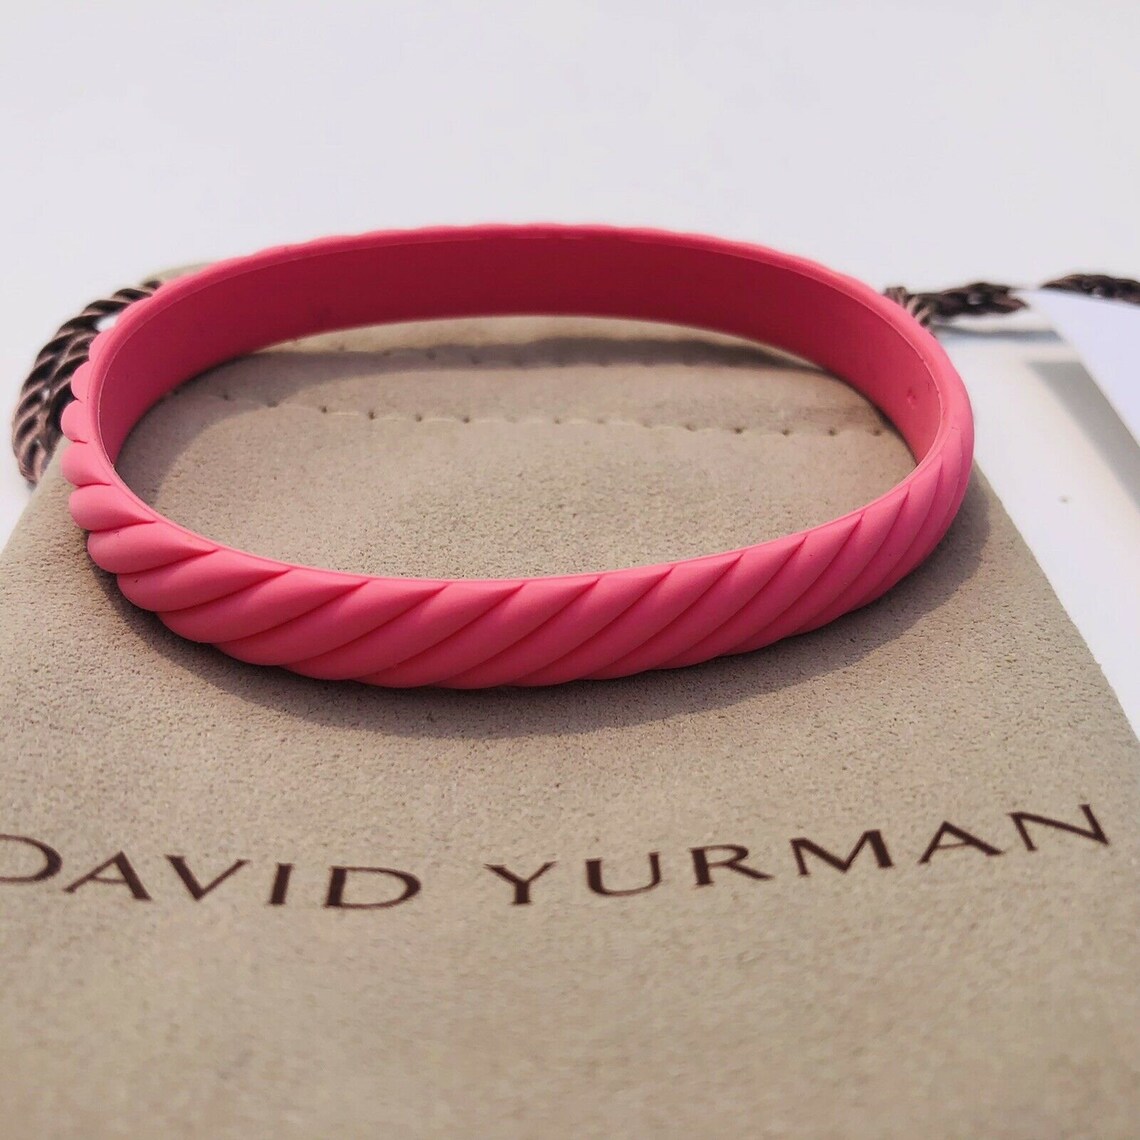 Authentic David Yurman Pink Rubber Bracelet Size Small/Medium